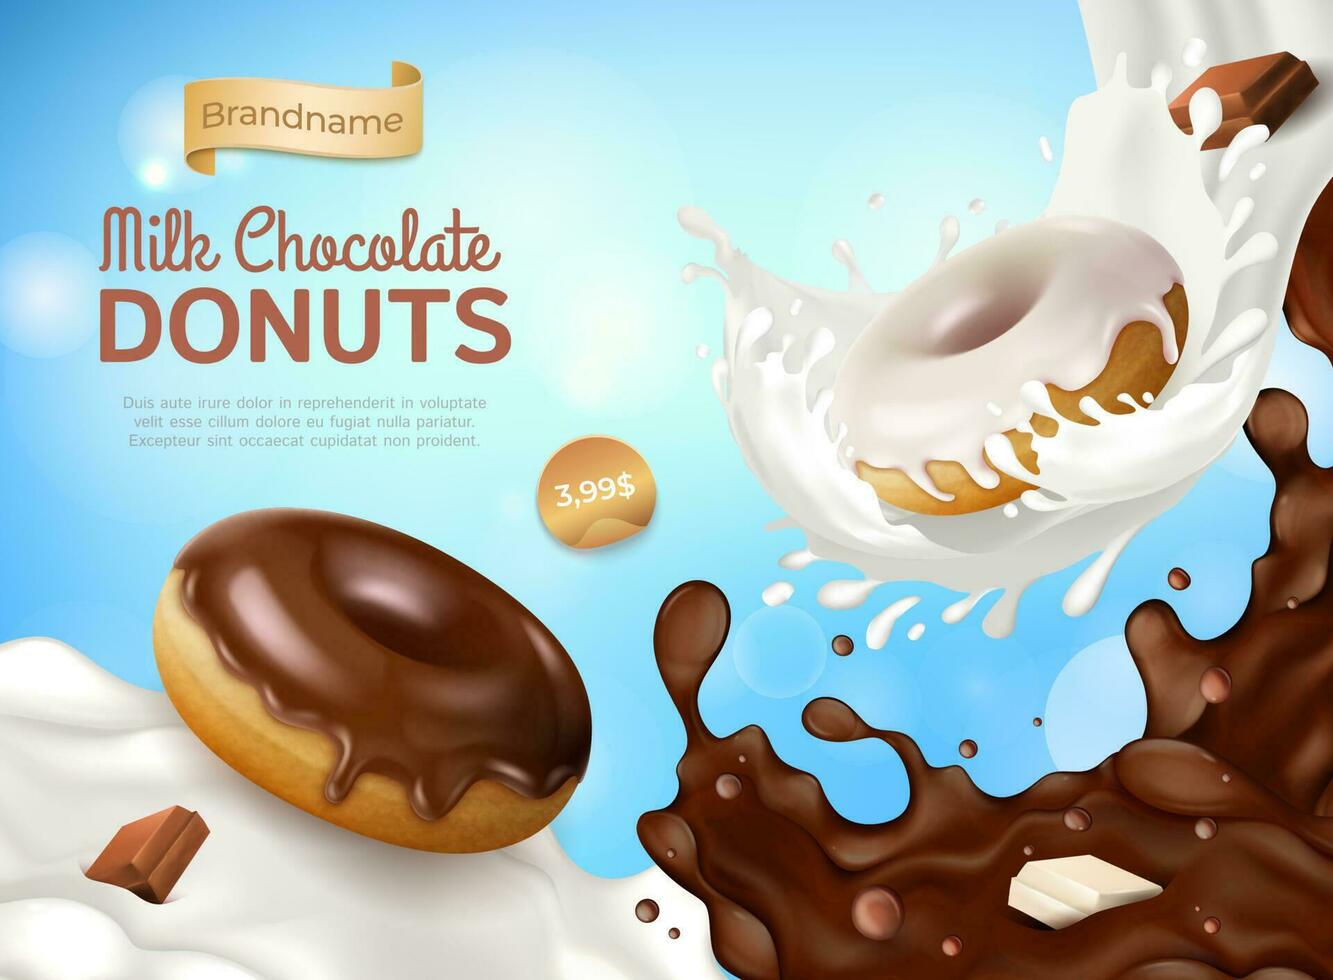 realista detallado 3d Leche chocolate rosquillas anuncios bandera concepto póster tarjeta. vector